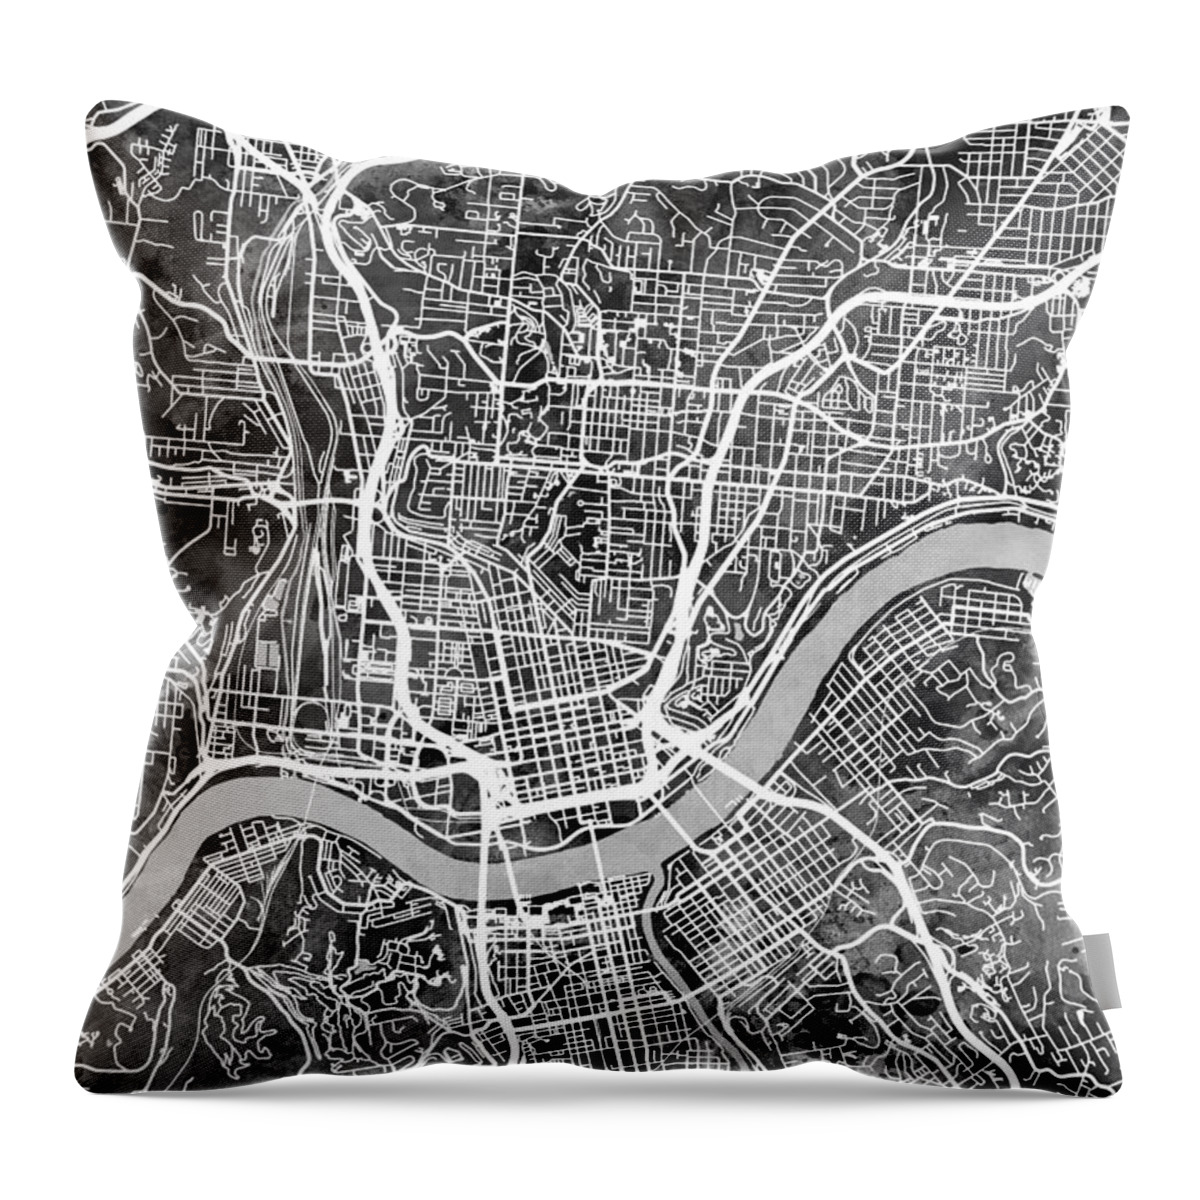 Cincinnati Throw Pillow featuring the digital art Cincinnati Ohio City Map #2 by Michael Tompsett